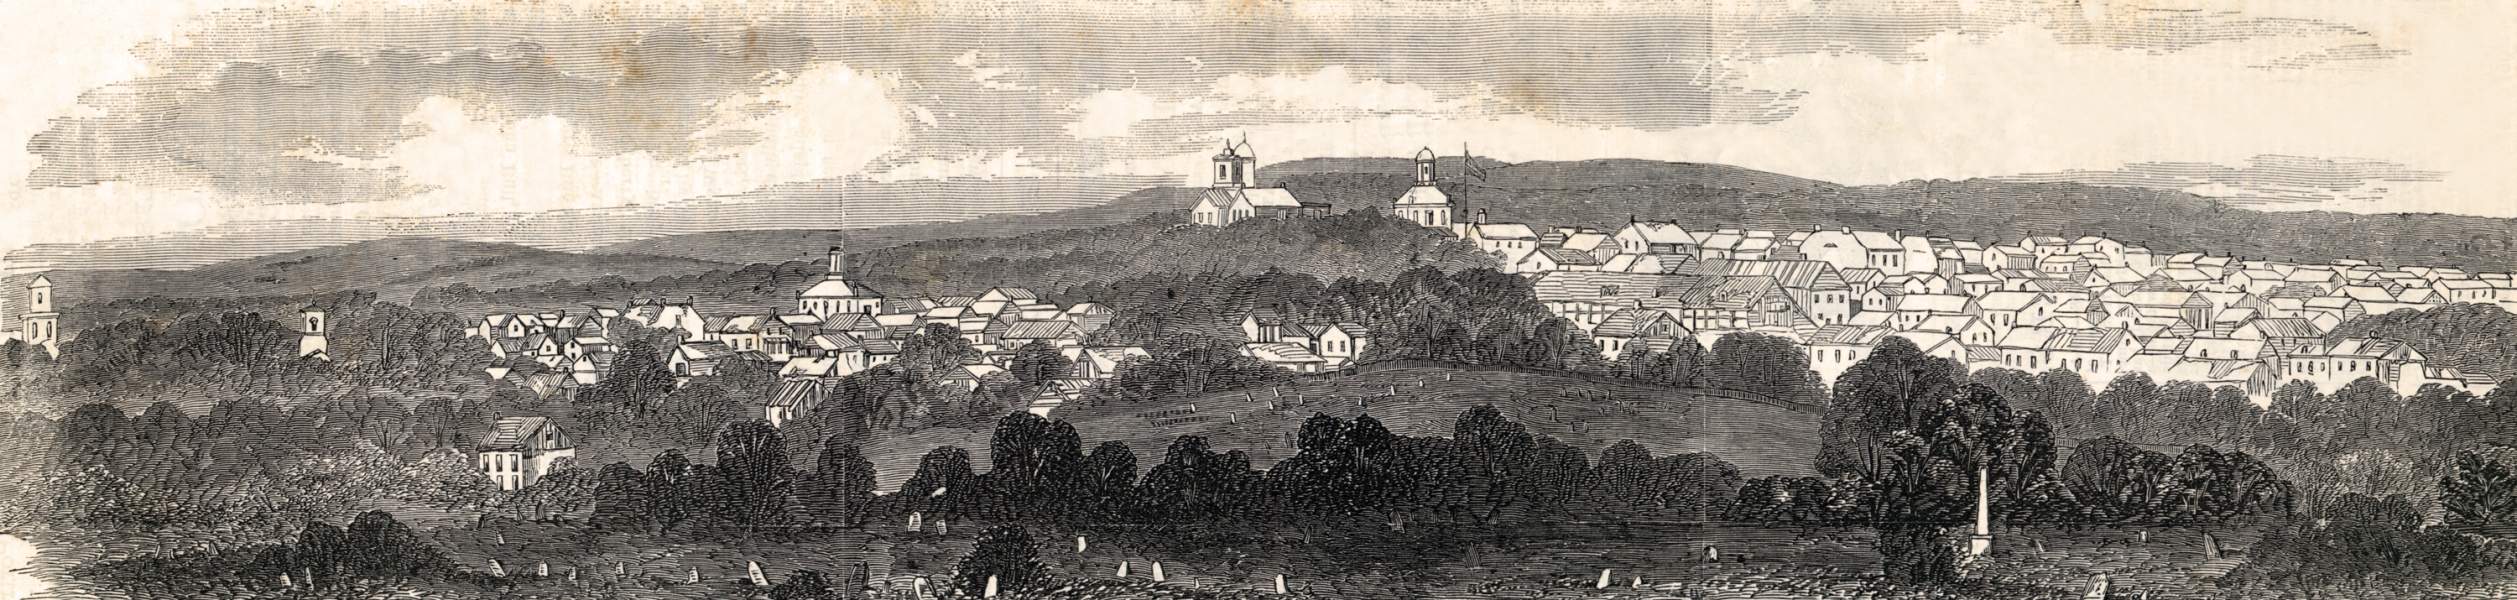 Chambersburg, Pennsylvania, June, 1863, artist's impression, zoomable image